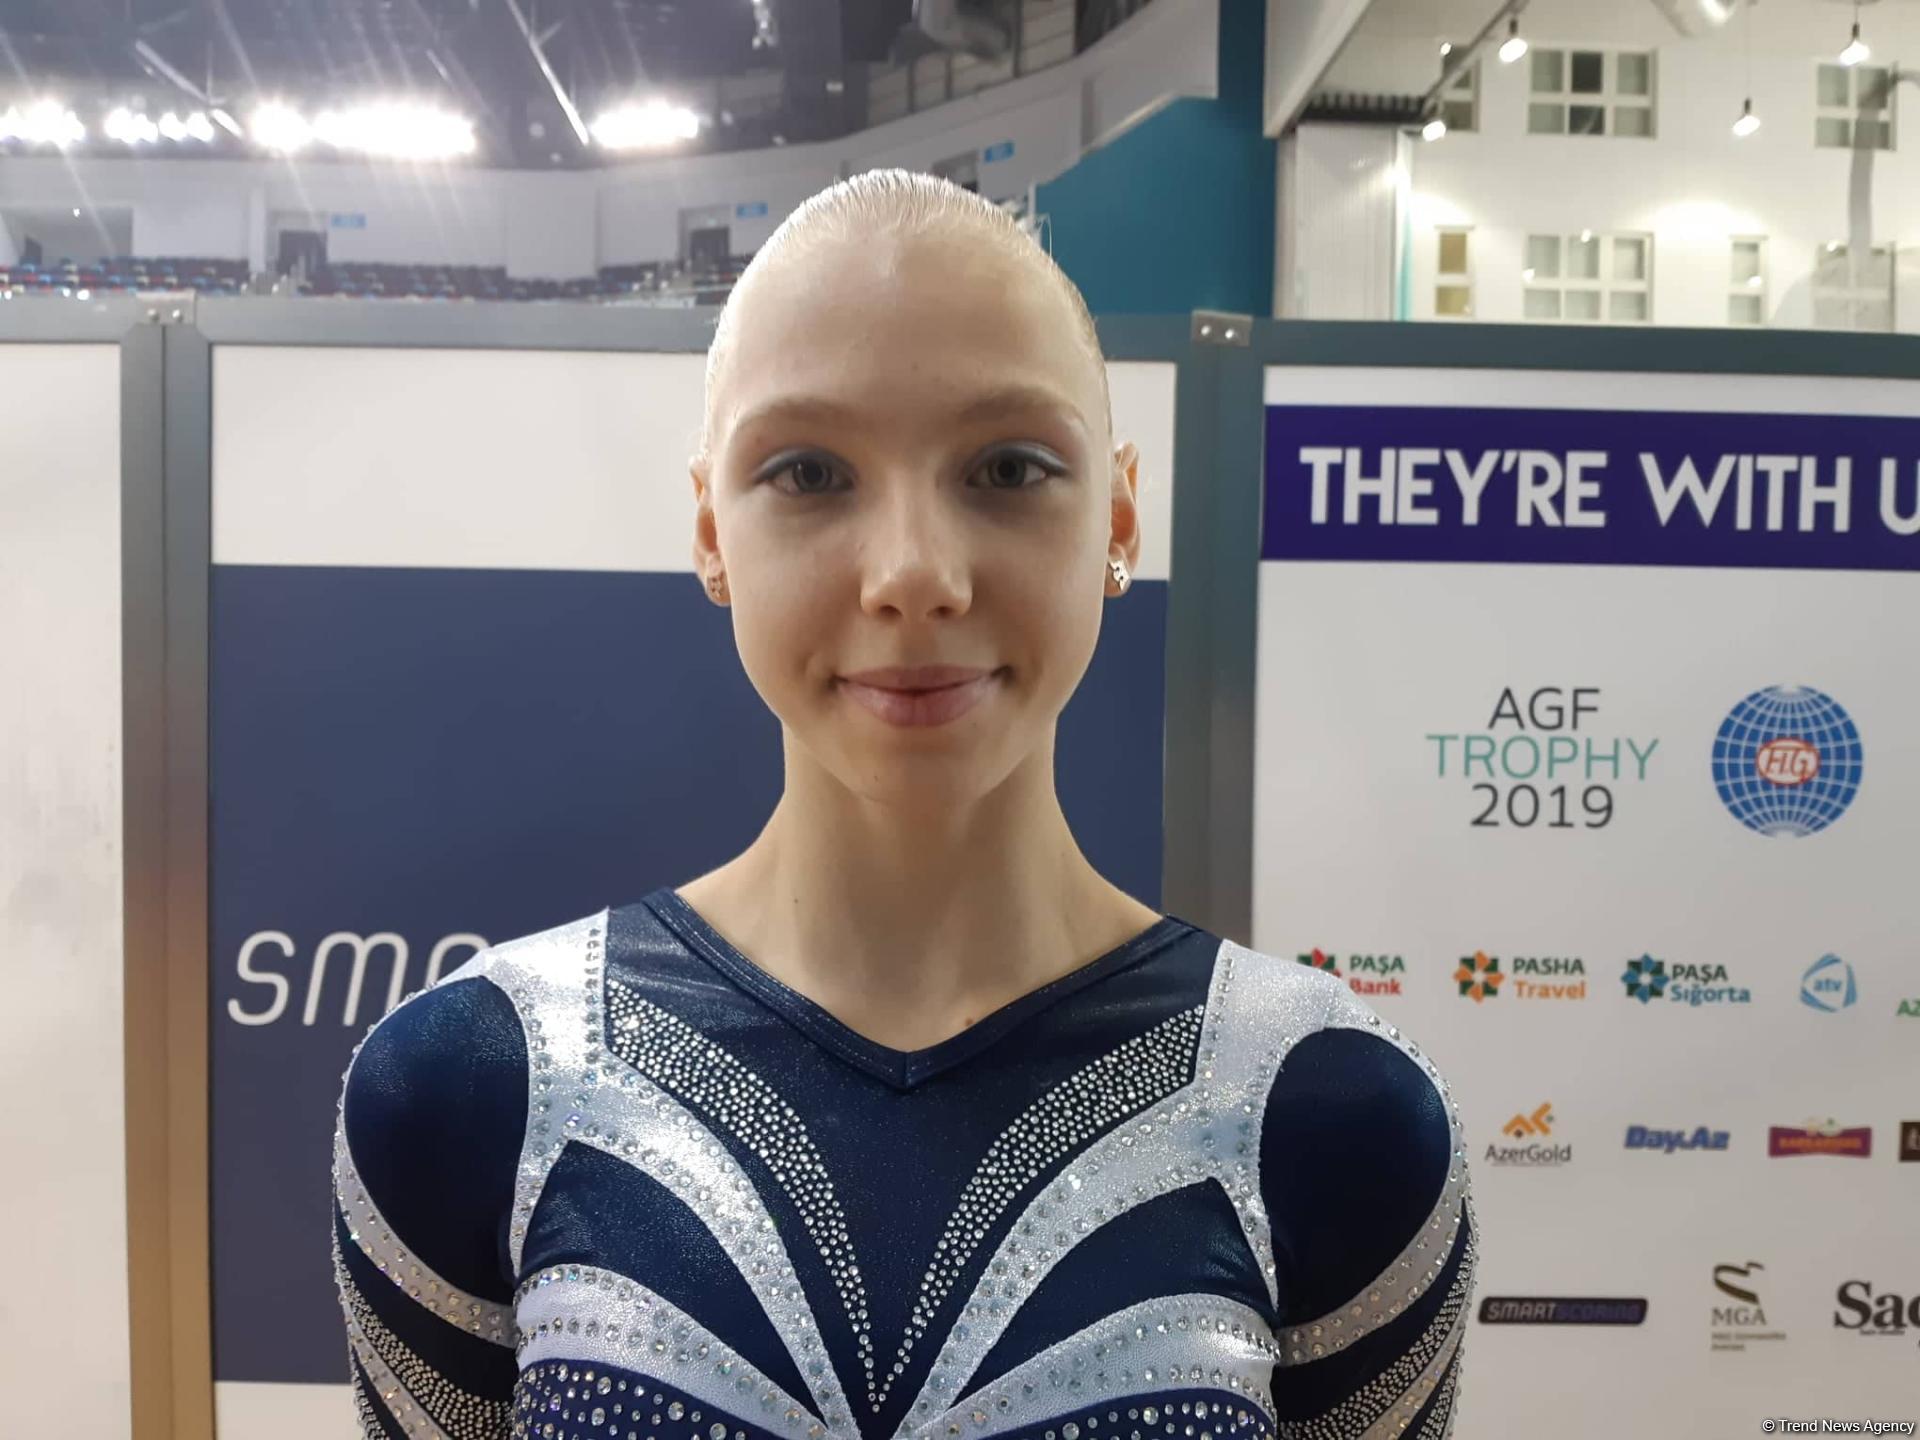 EYOF Baku 2019: Wonderful atmosphere in National Gymnastics Arena - Ukrainian athletes